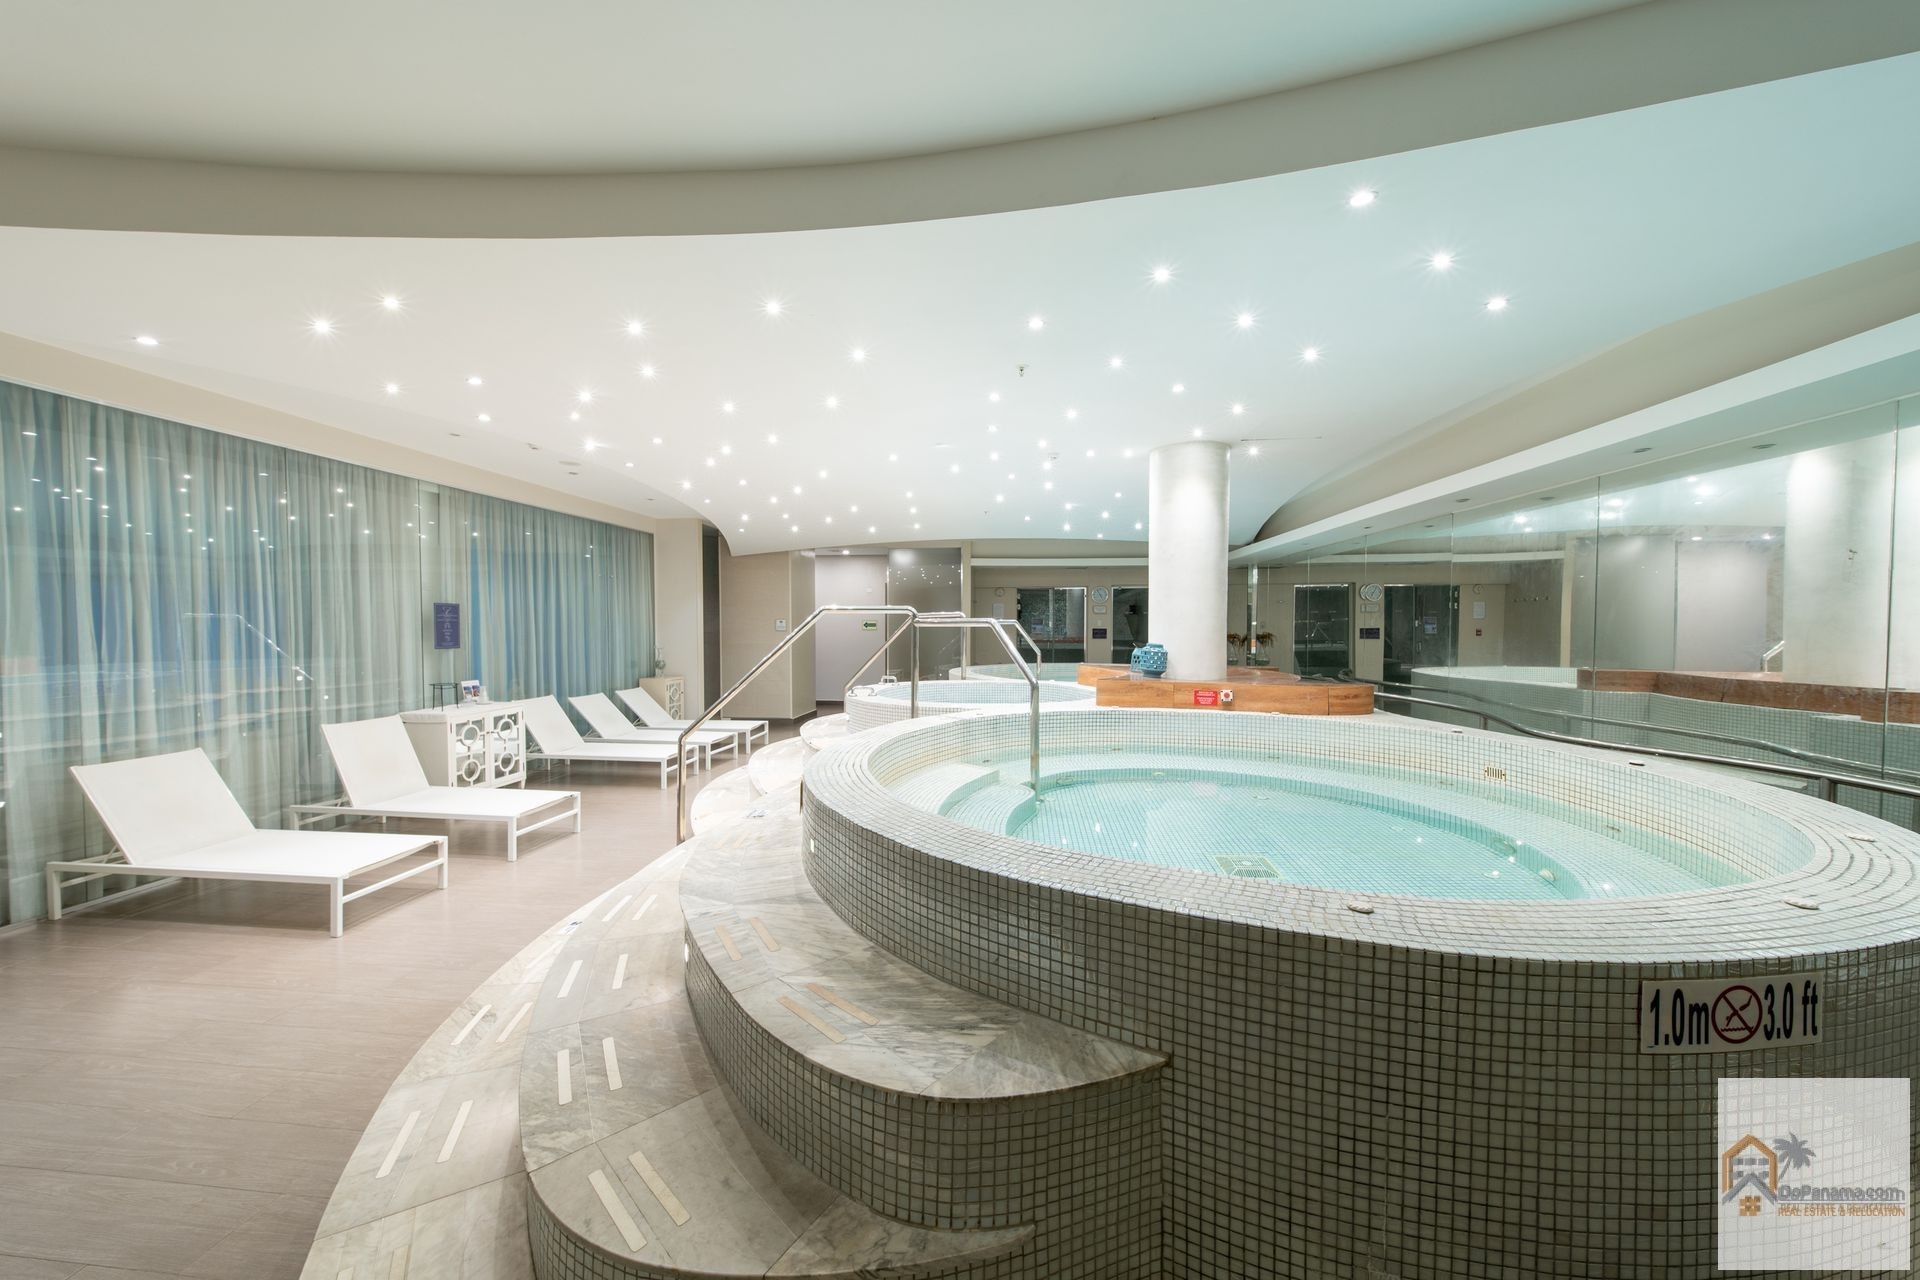 Luxurious 3-Bedroom Penthouse in Casa Bonita Condo & Beach Club - Your Paradise Awaits